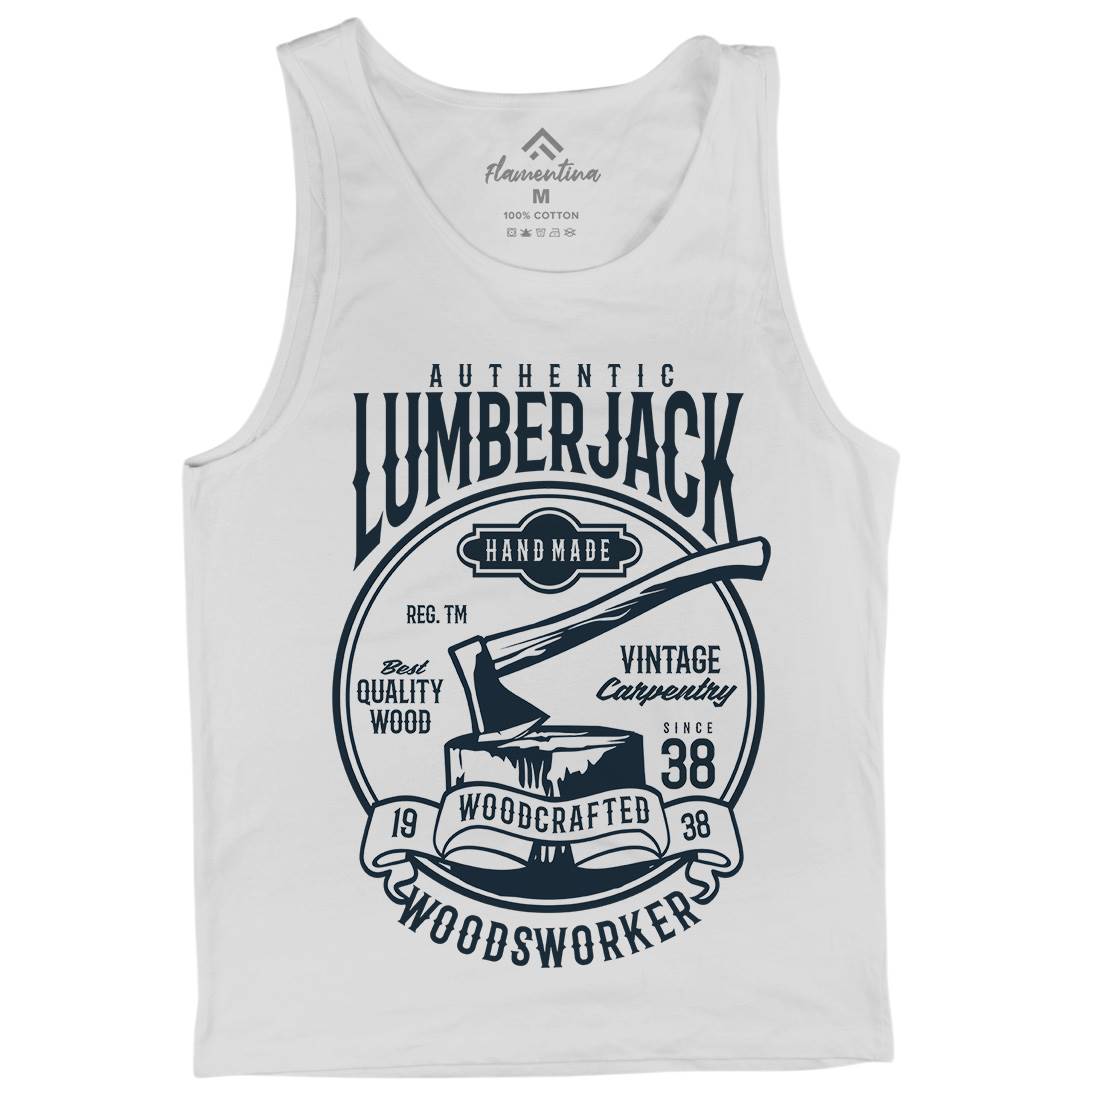 Authentic Lumberjack Mens Tank Top Vest Retro B181